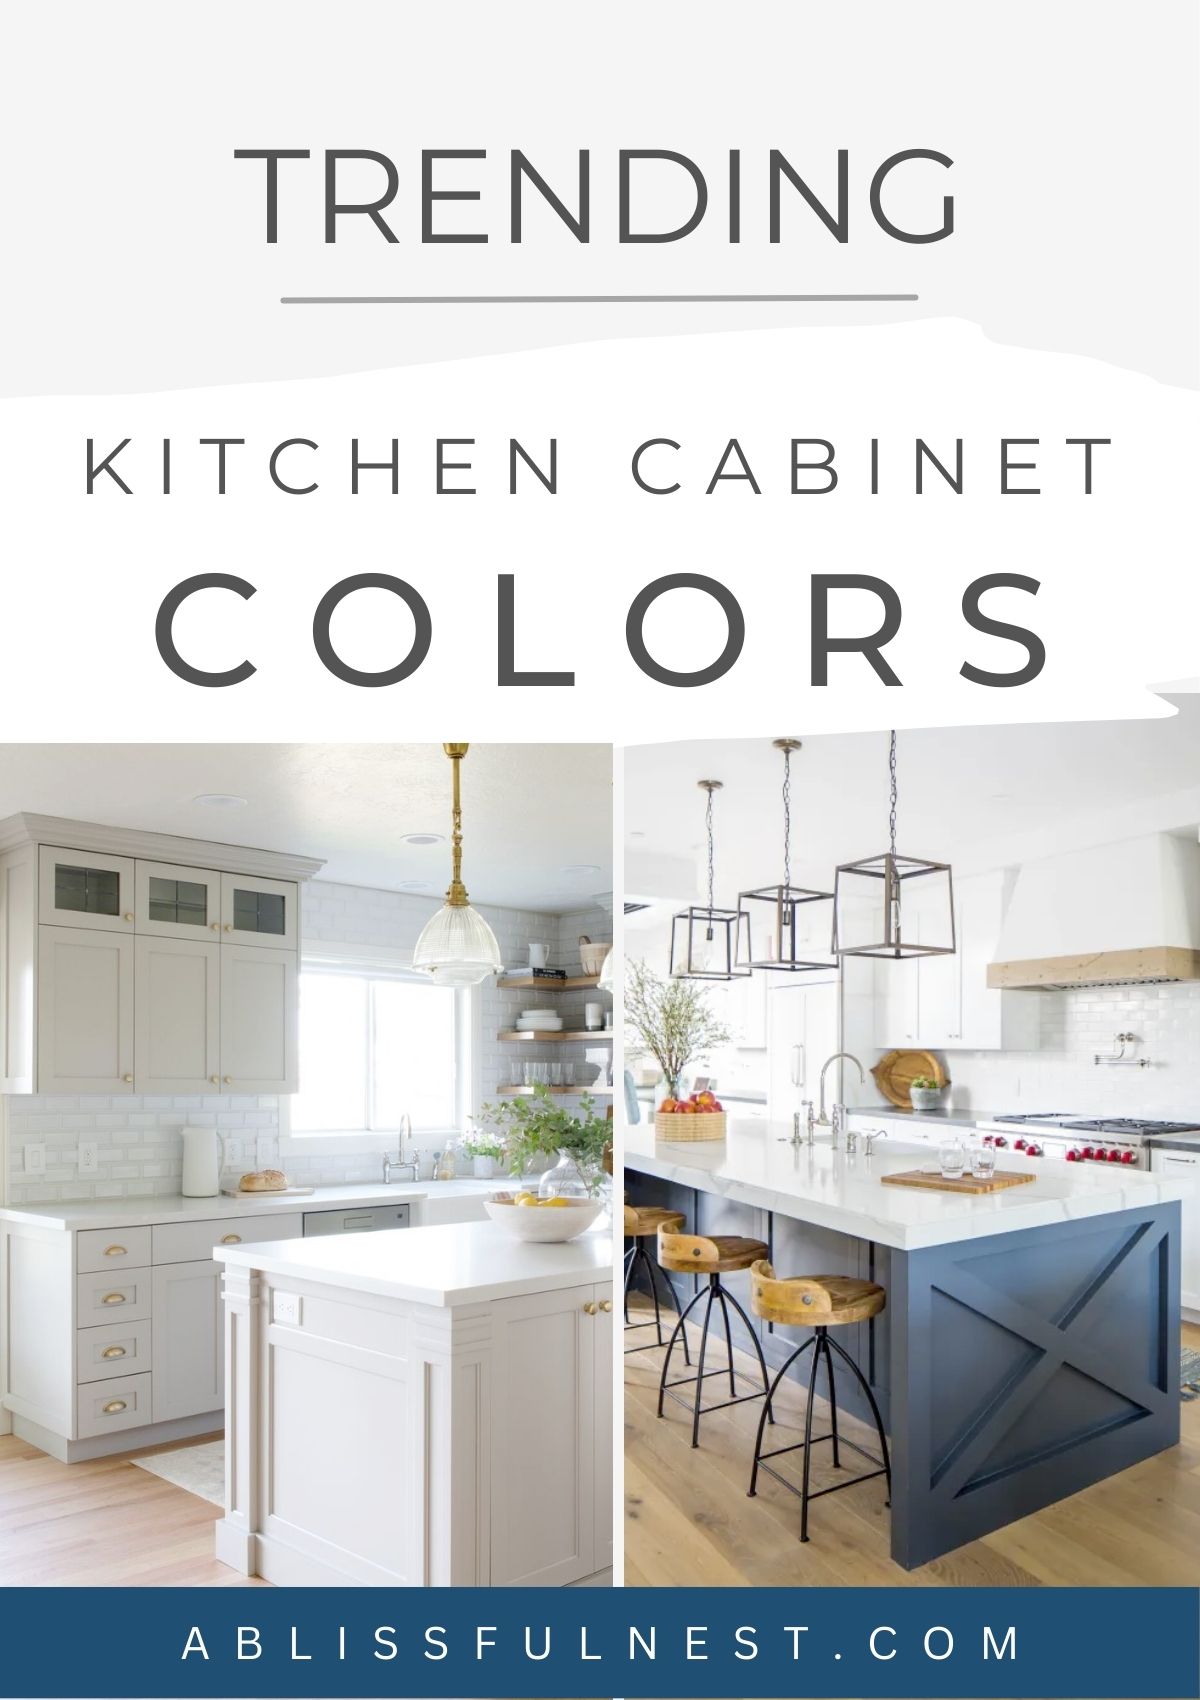 Trending Kitchen Colors A Blissful Nest